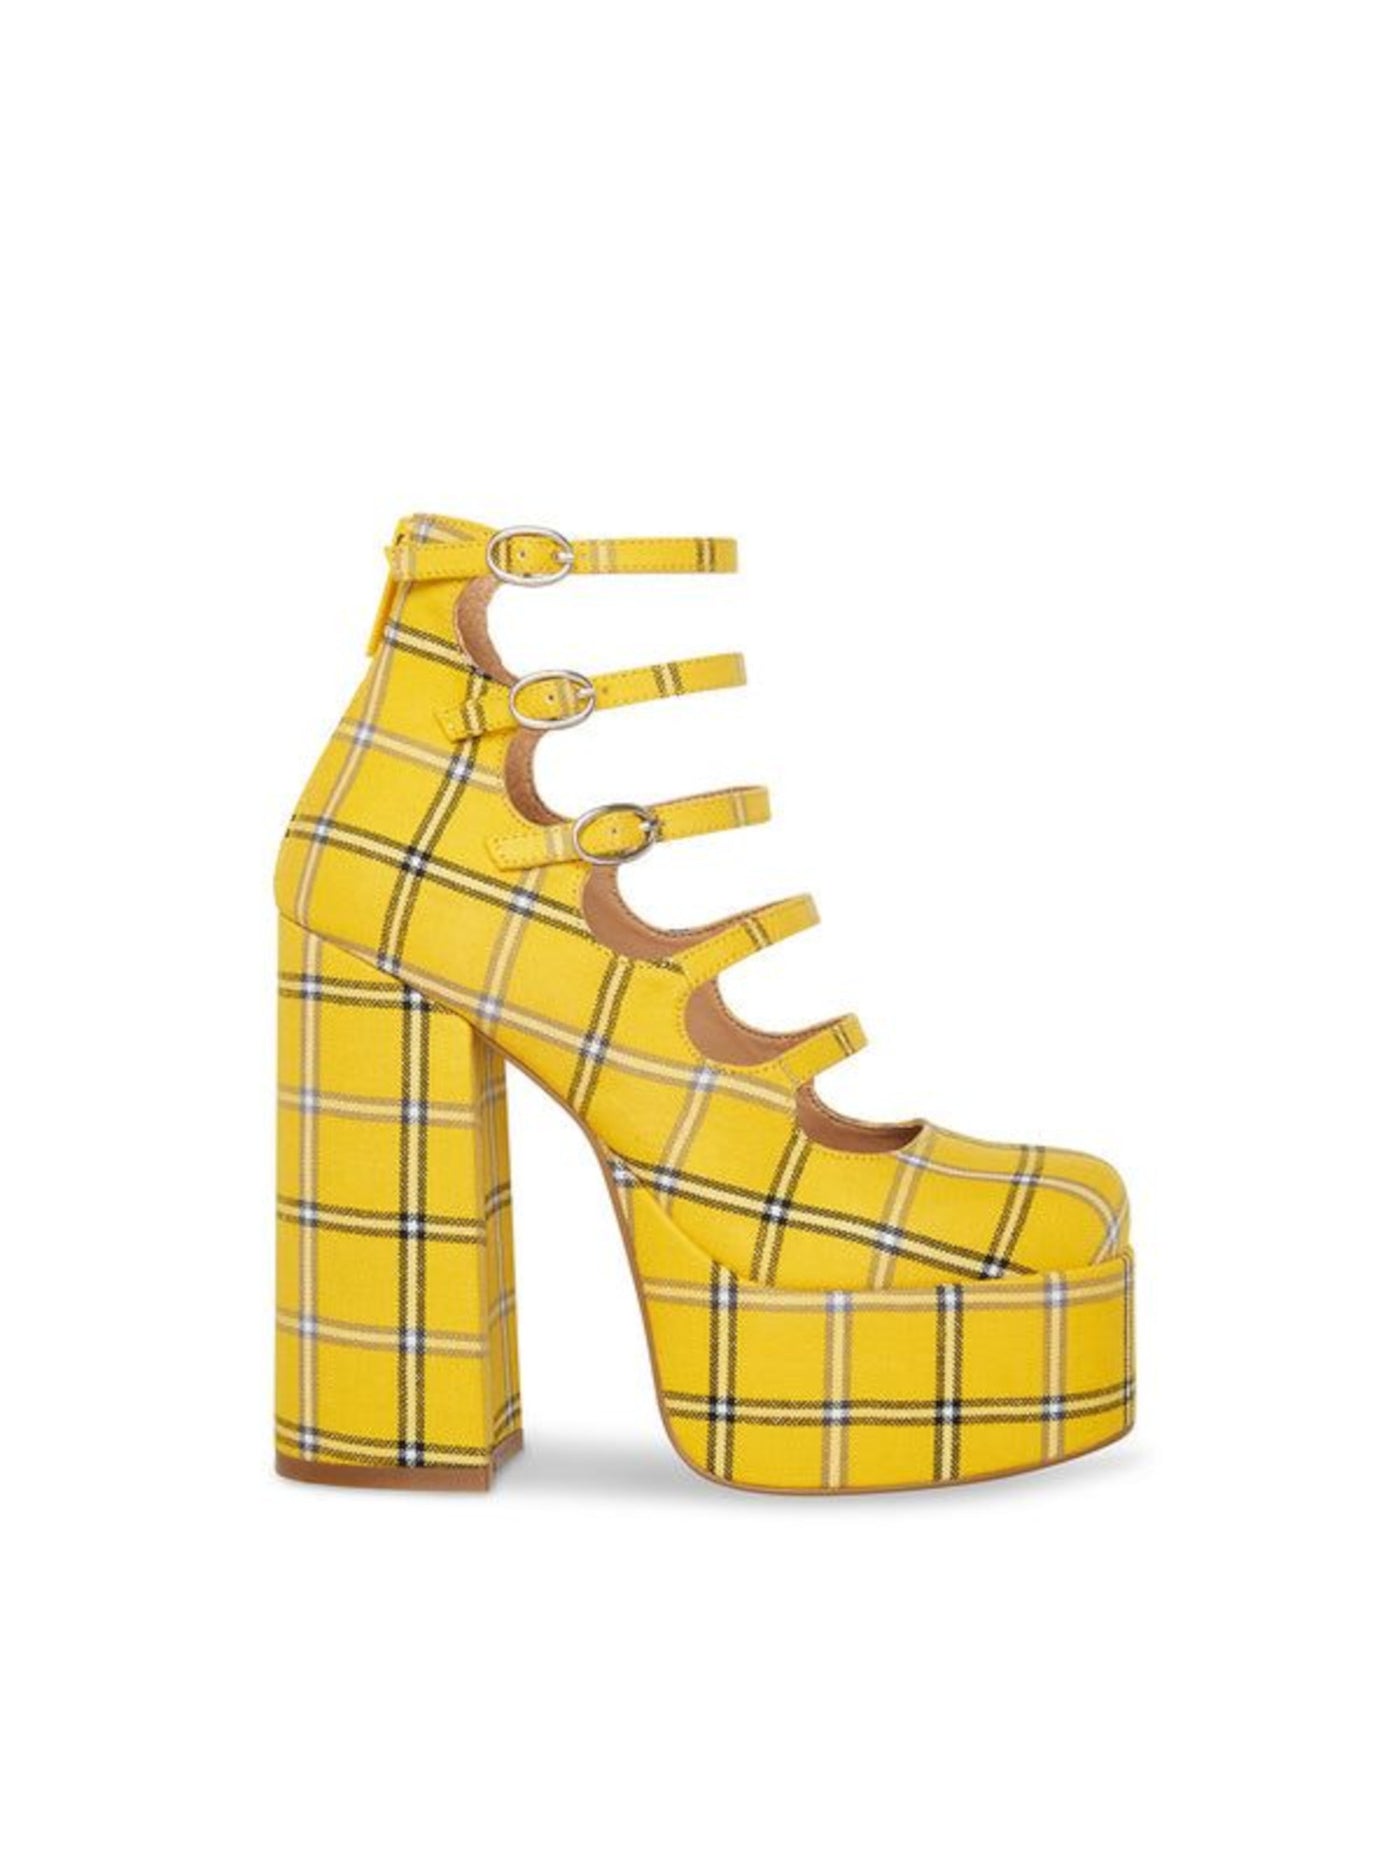 STEVE MADDEN Womens Yellow Plaid 3" Platform Adjustable Round Toe Block Heel Zip-Up Dress Pumps Shoes 6 M